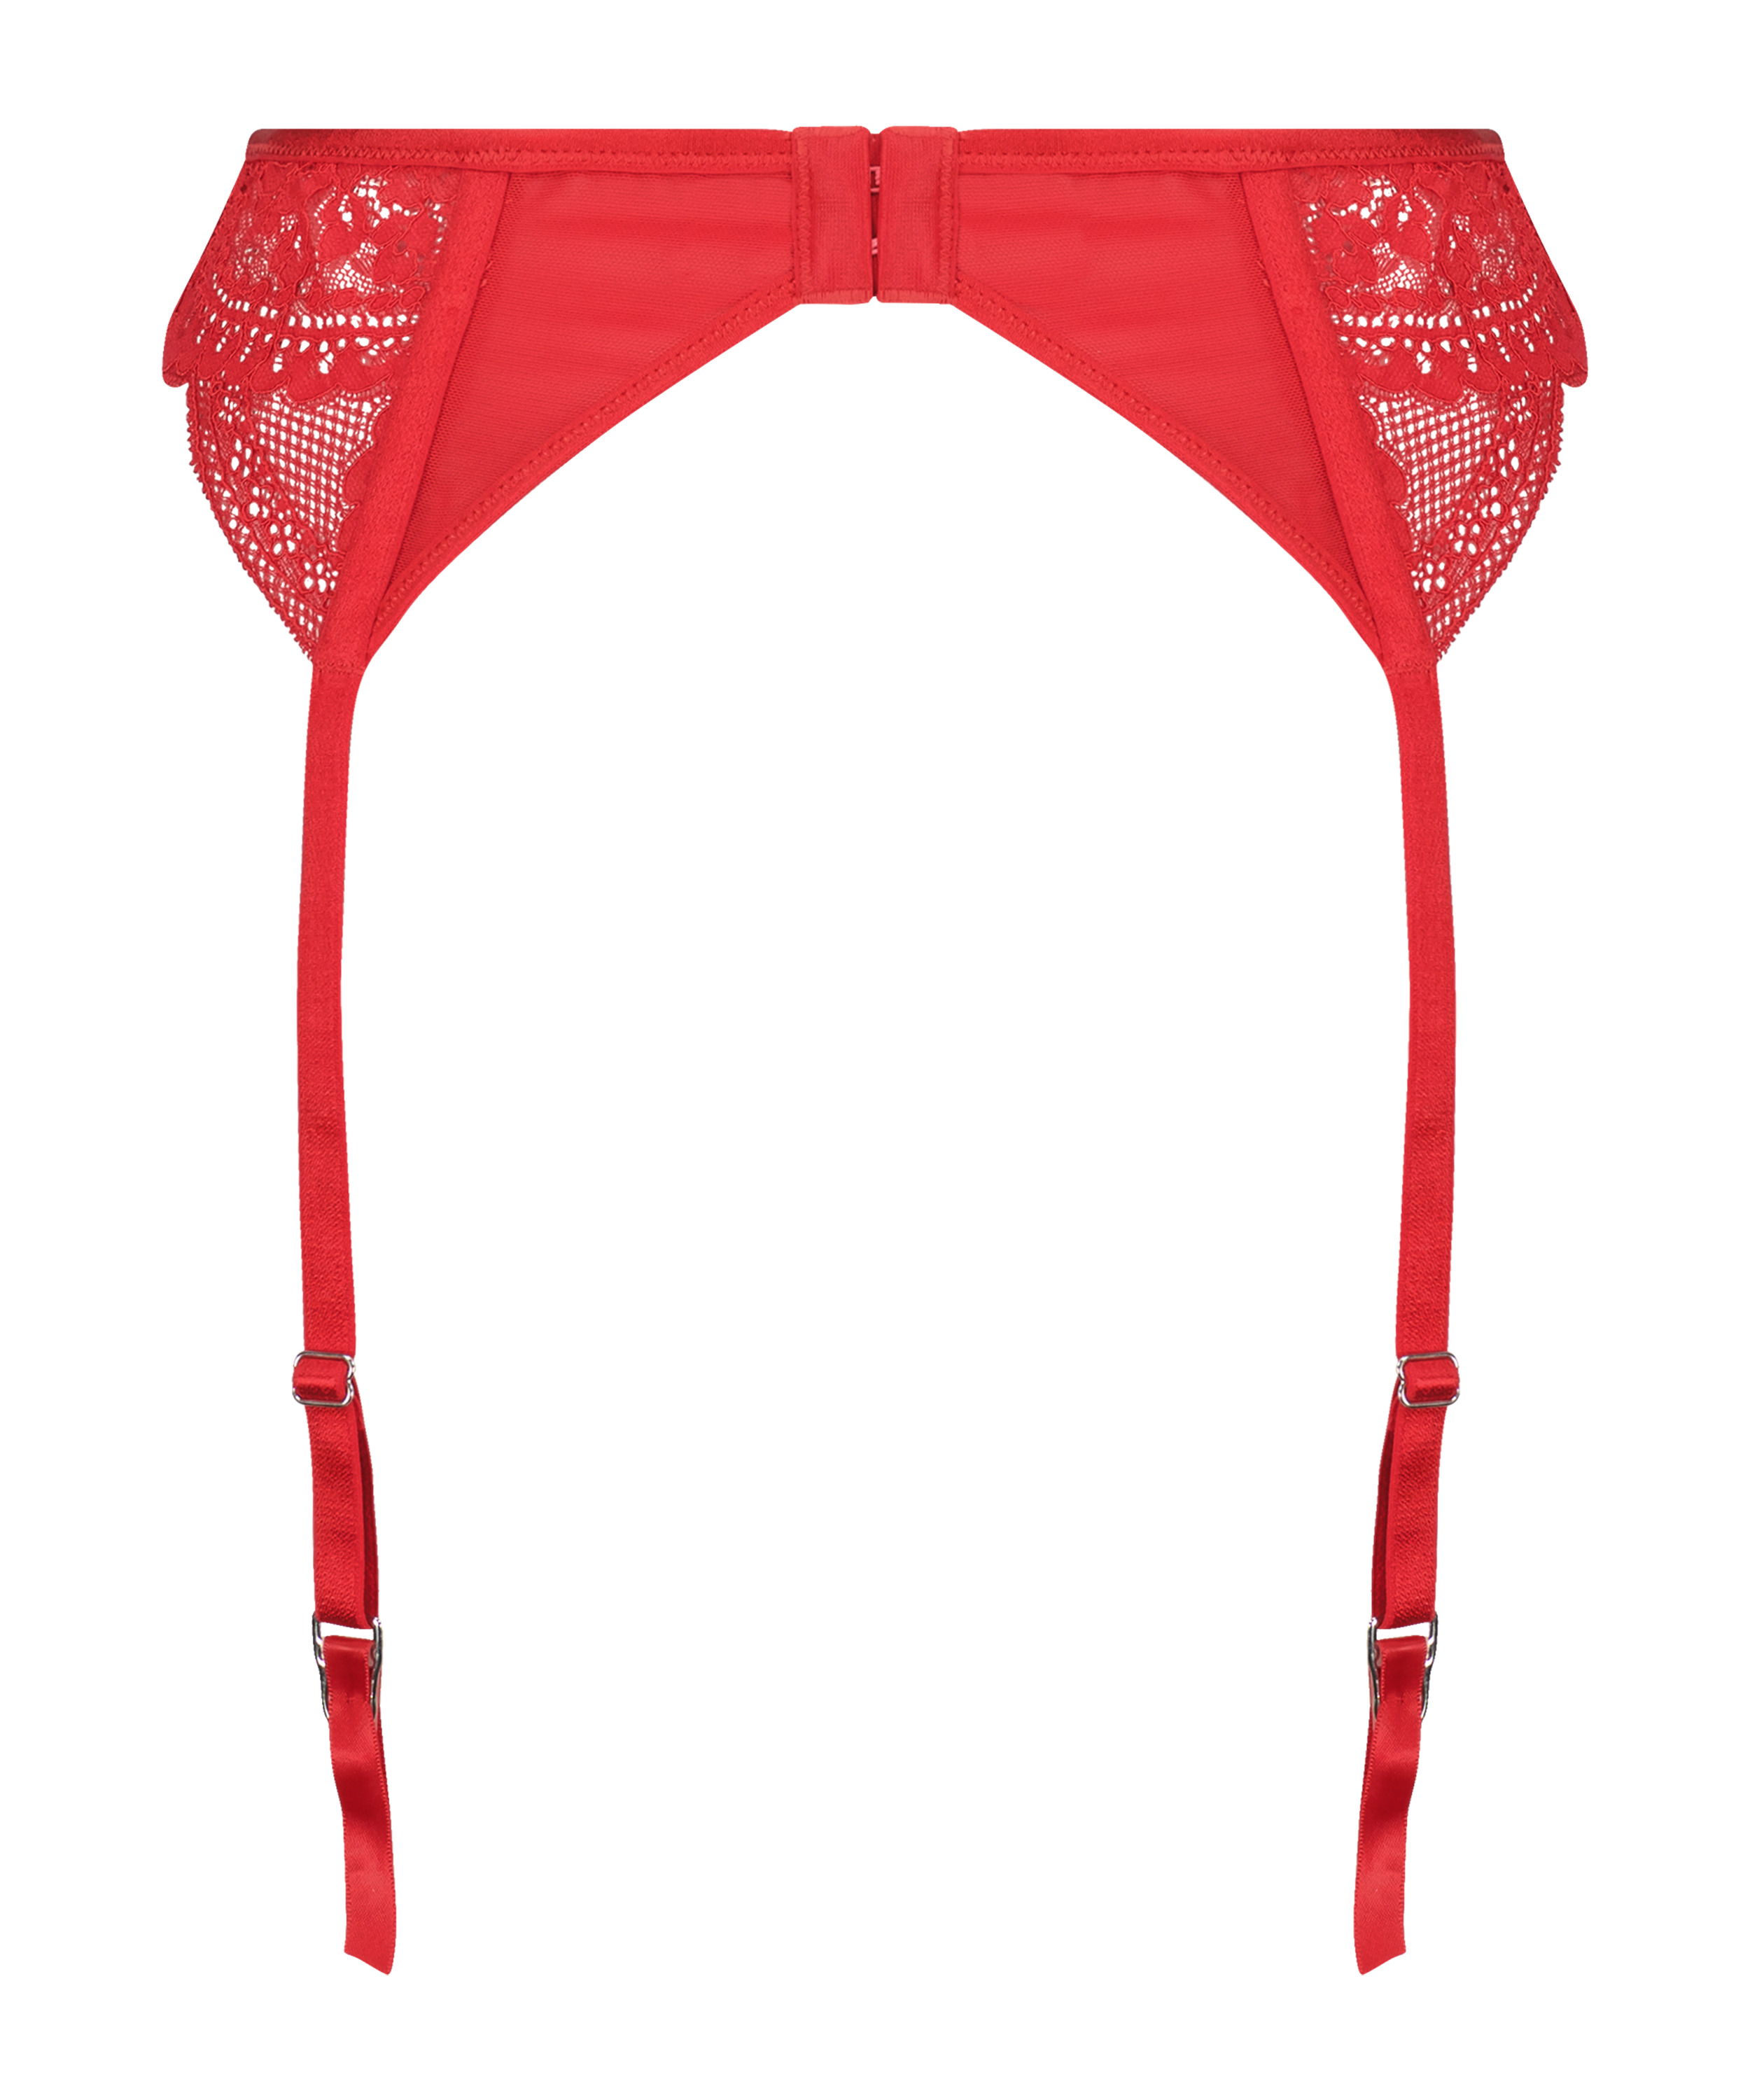 Oceana Suspenders, Red, main